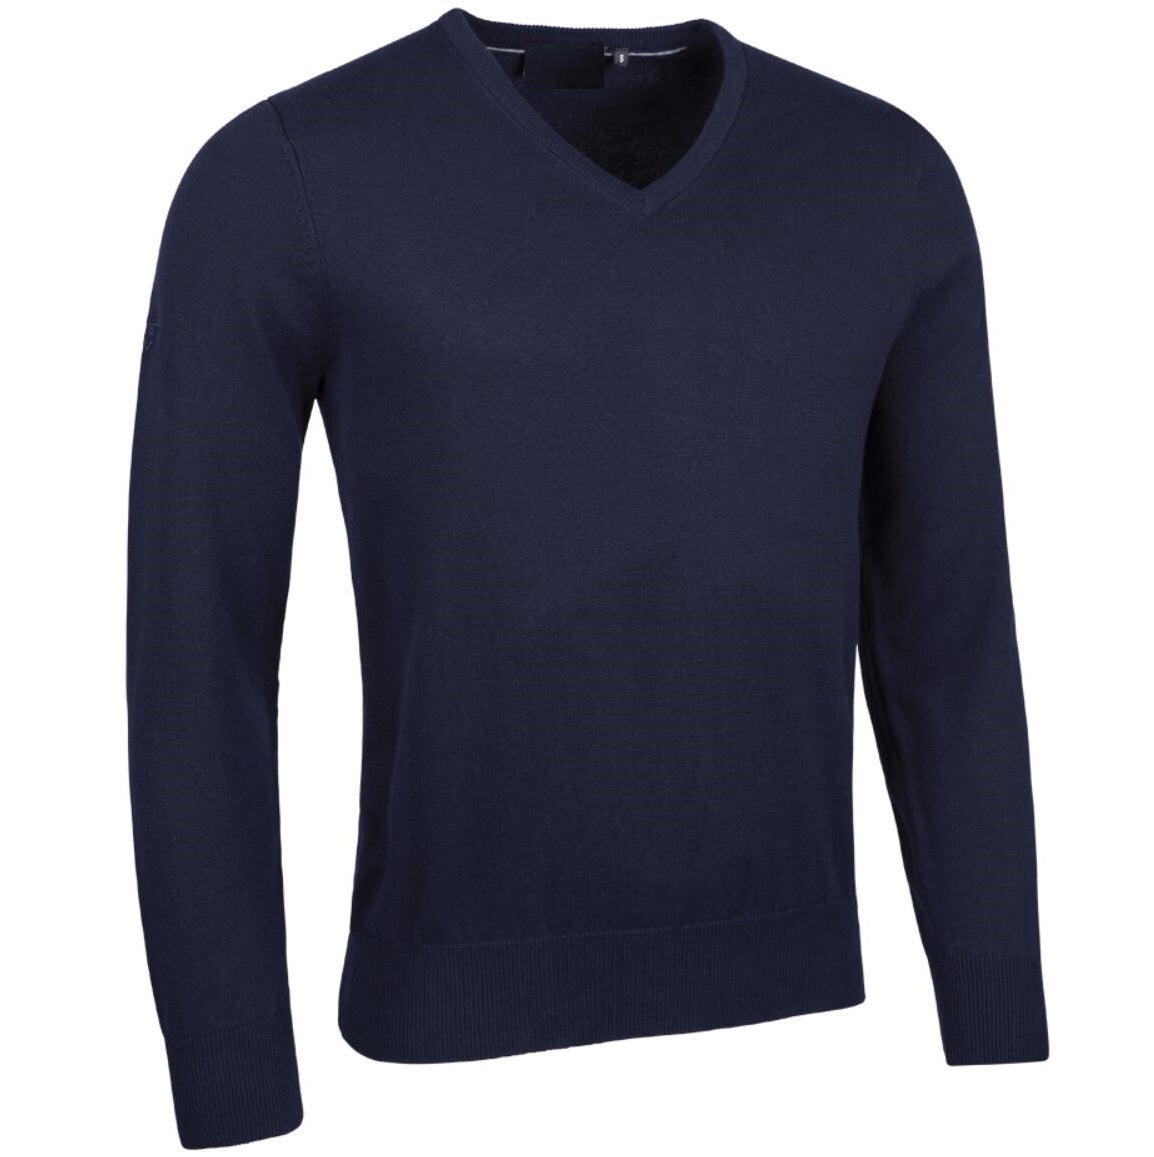 50% OFF - ORLO VIVO Cotton Cashmere V-Neck Sweater - Tailored Fit - Size: 2XL & 3XL